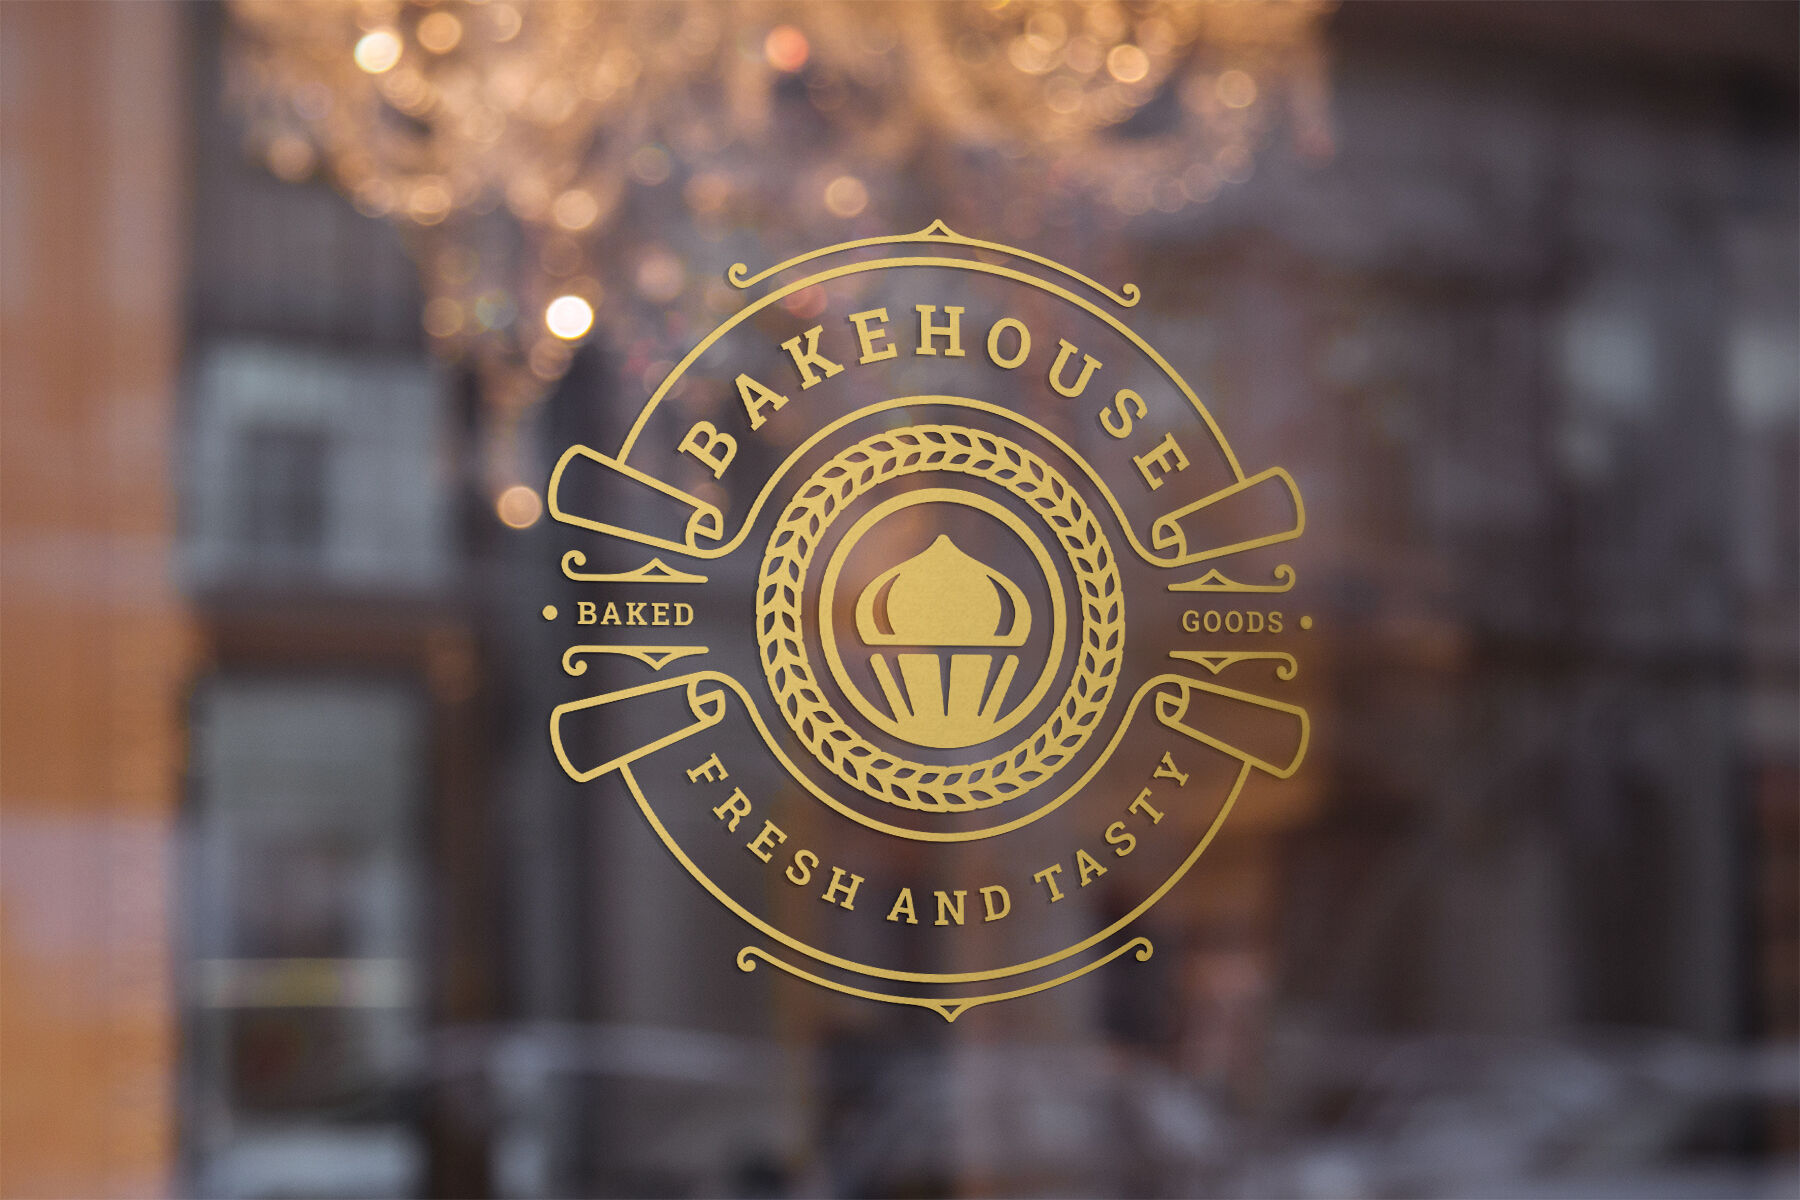 Bakery Shop Logo Design Template By Vasya Kobelev Thehungryjpeg Com